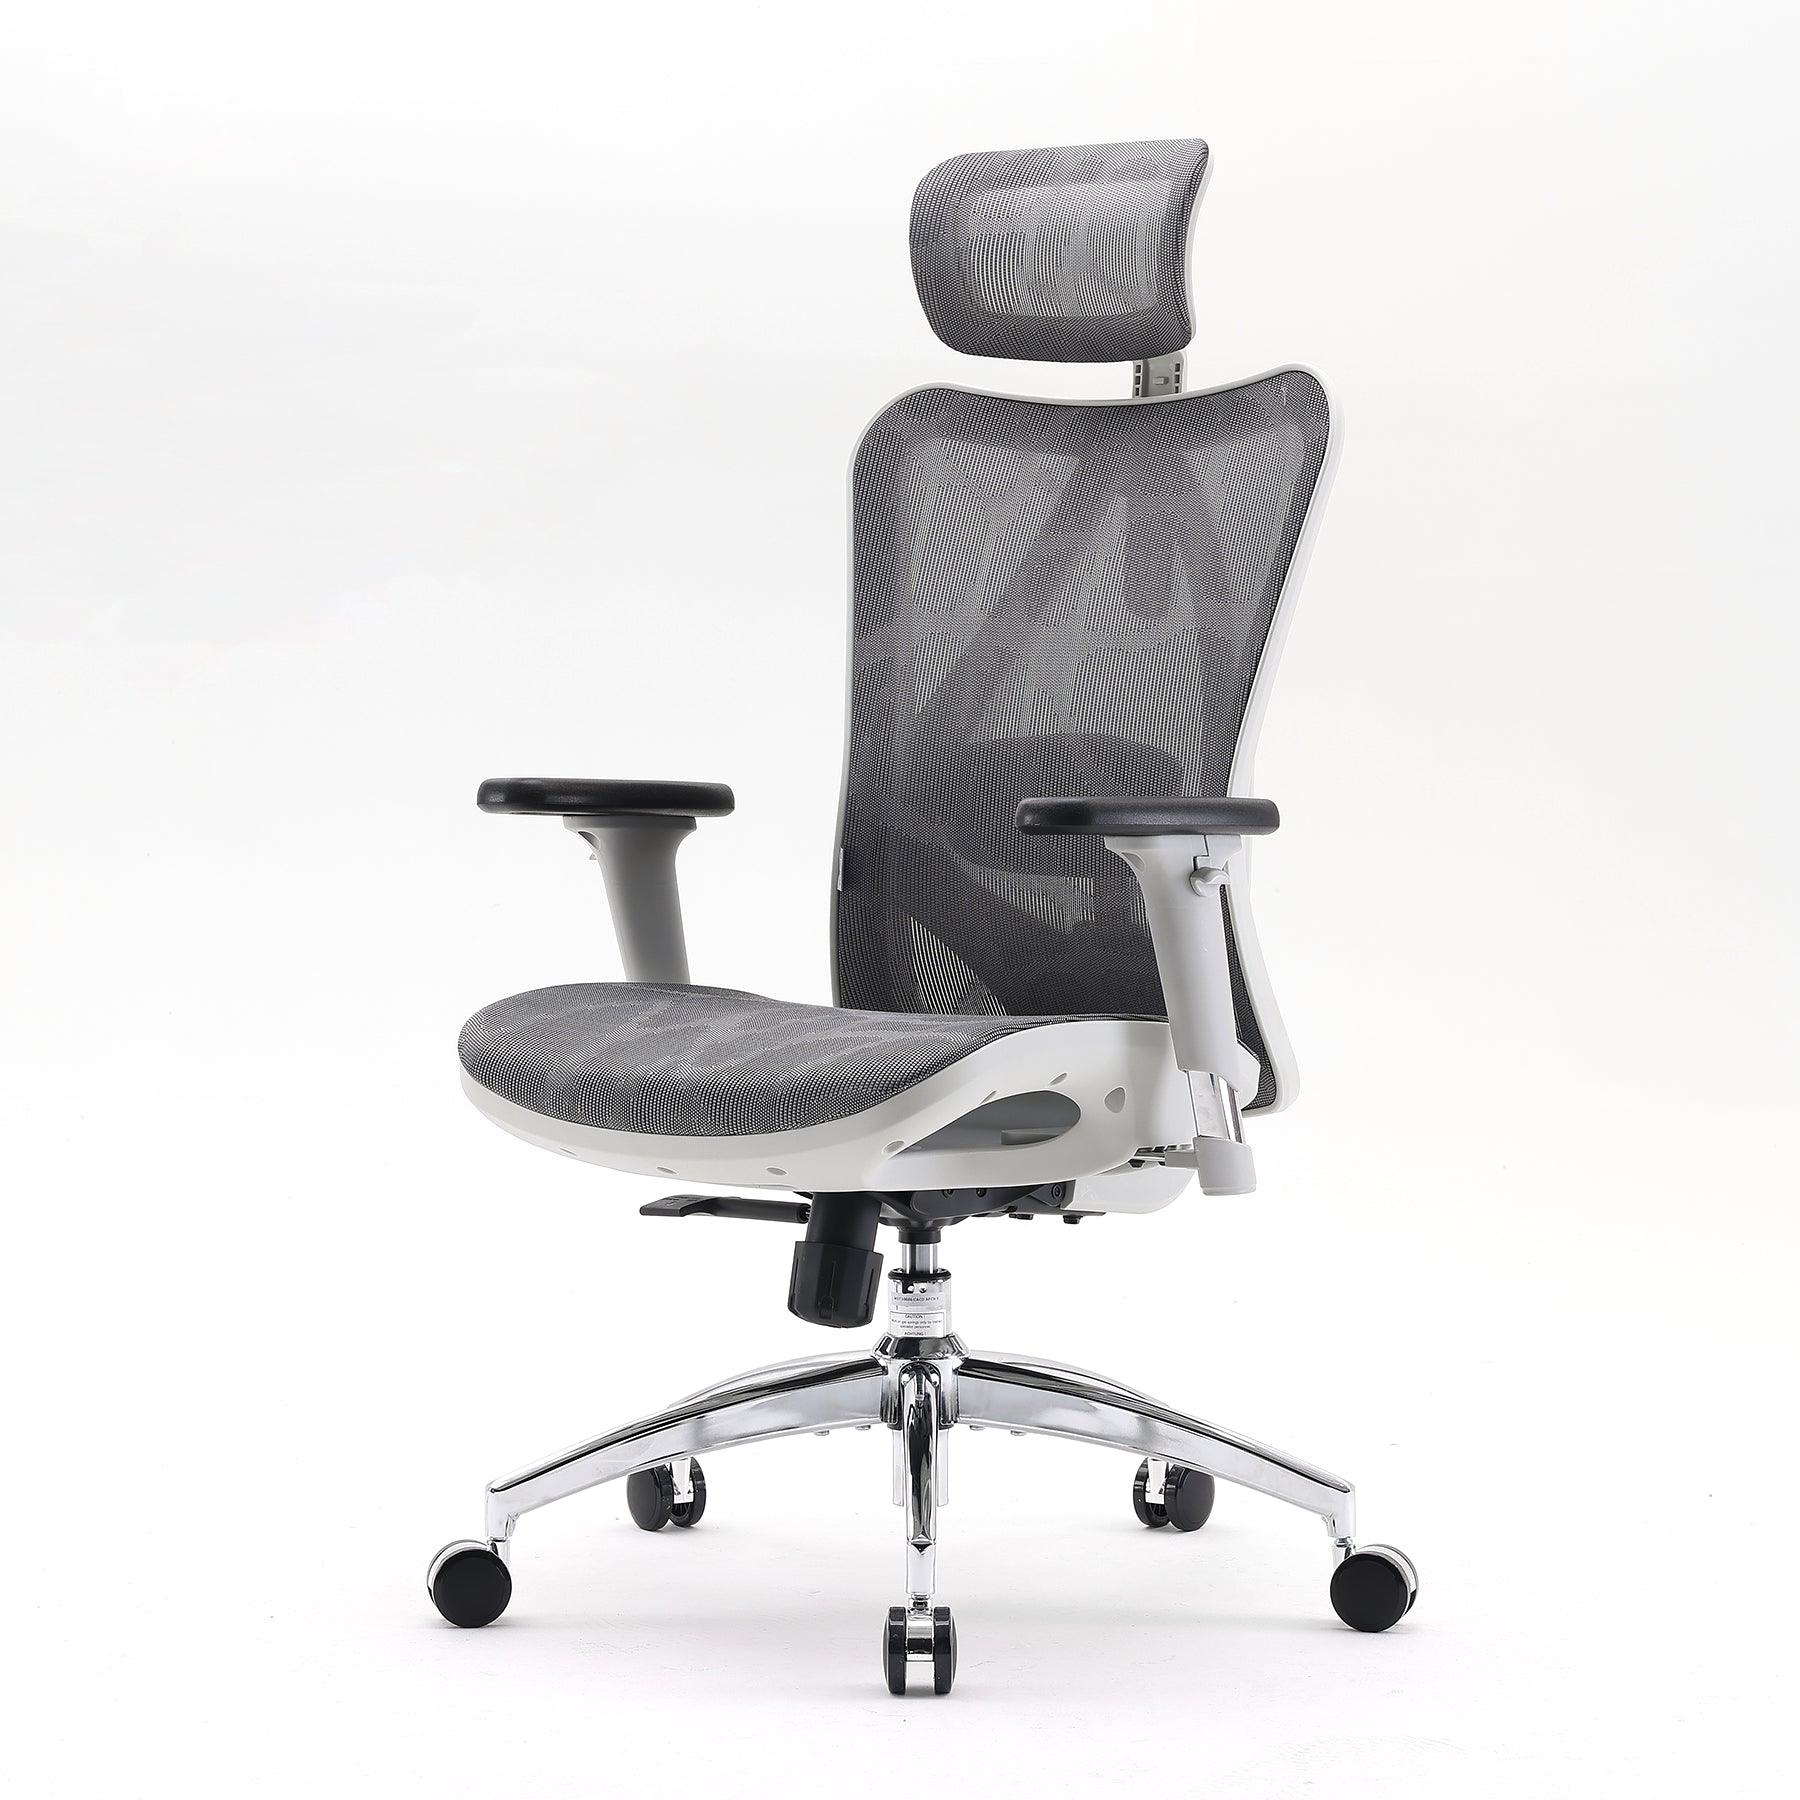 Sihoo M57 office full mesh boss swivel chair - AliExpress